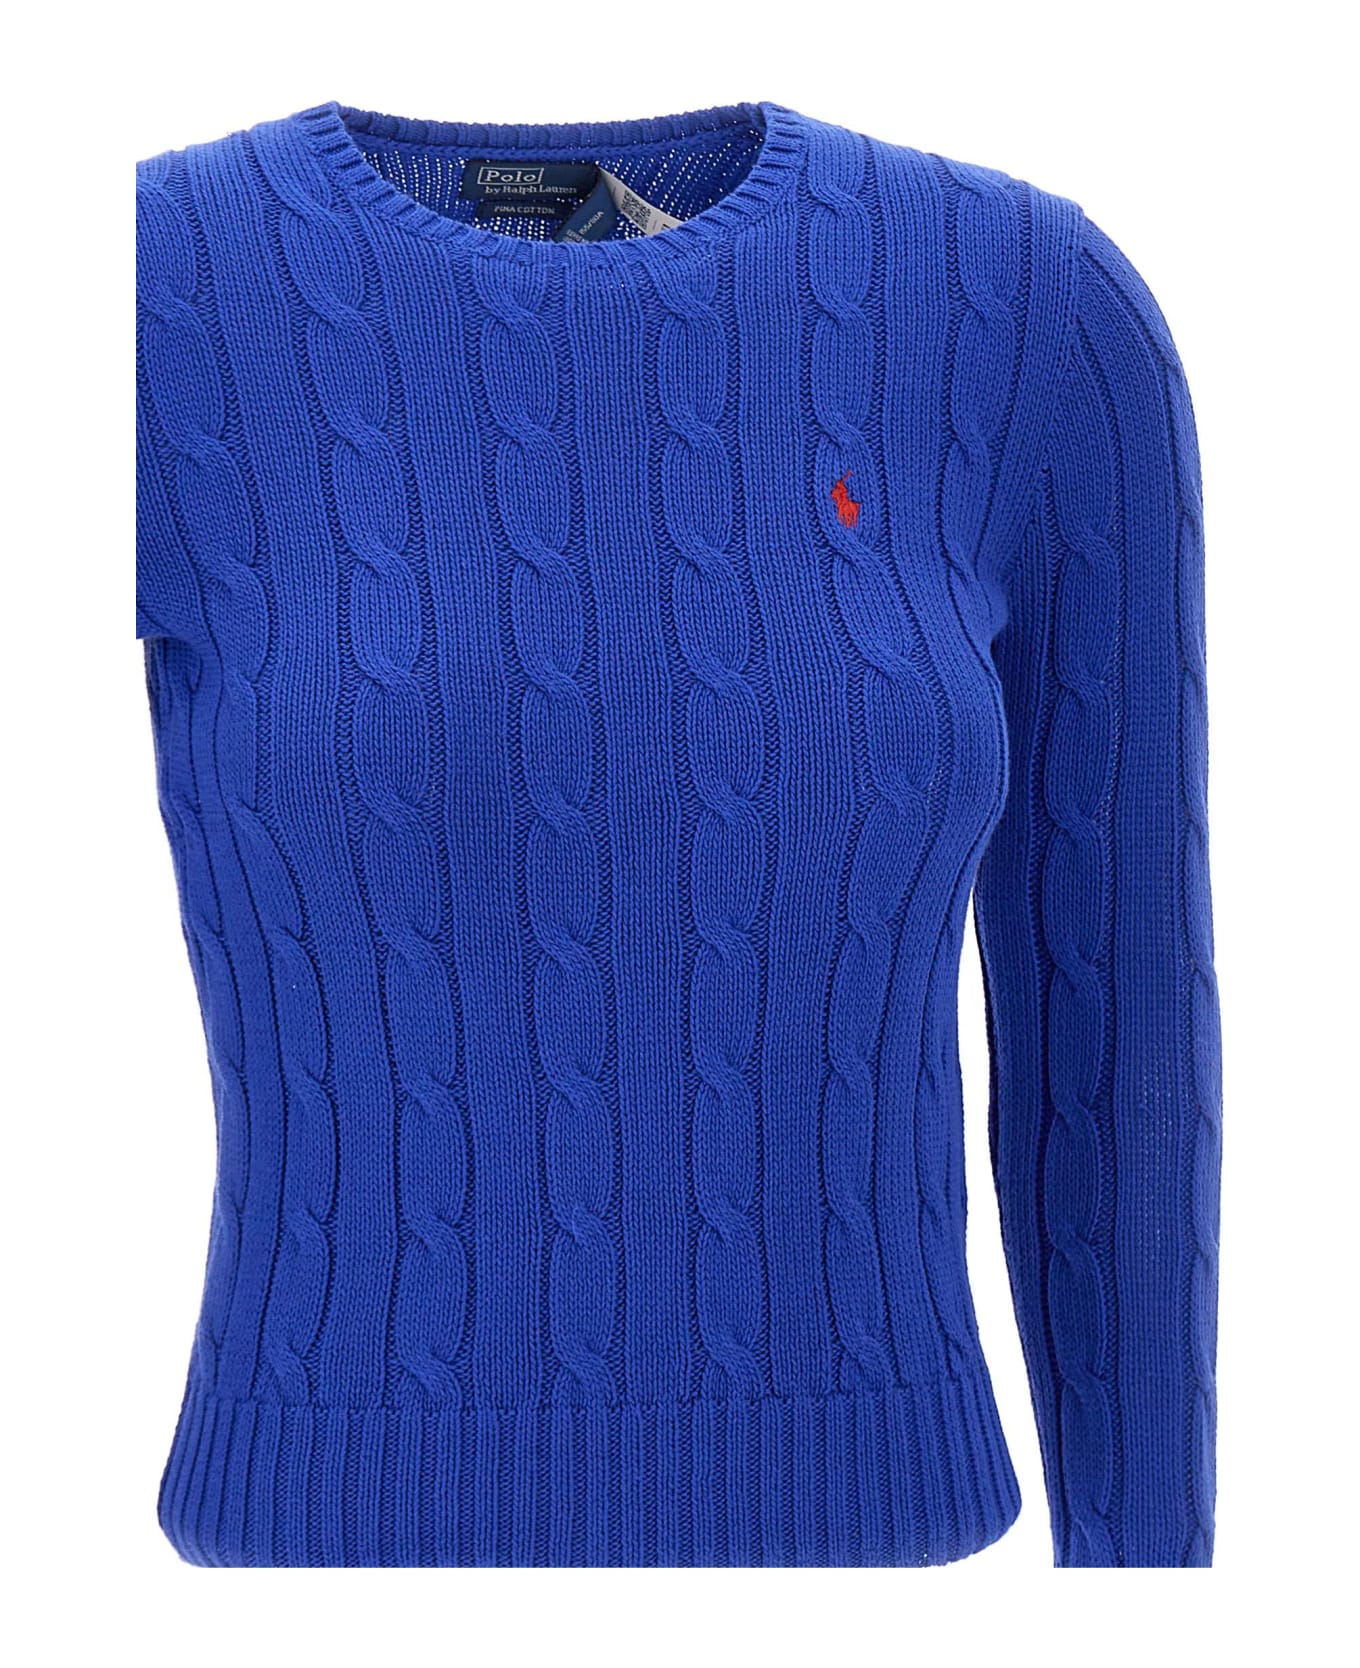 Polo Ralph Lauren "classic" Pima Cotton Sweater - BLUE